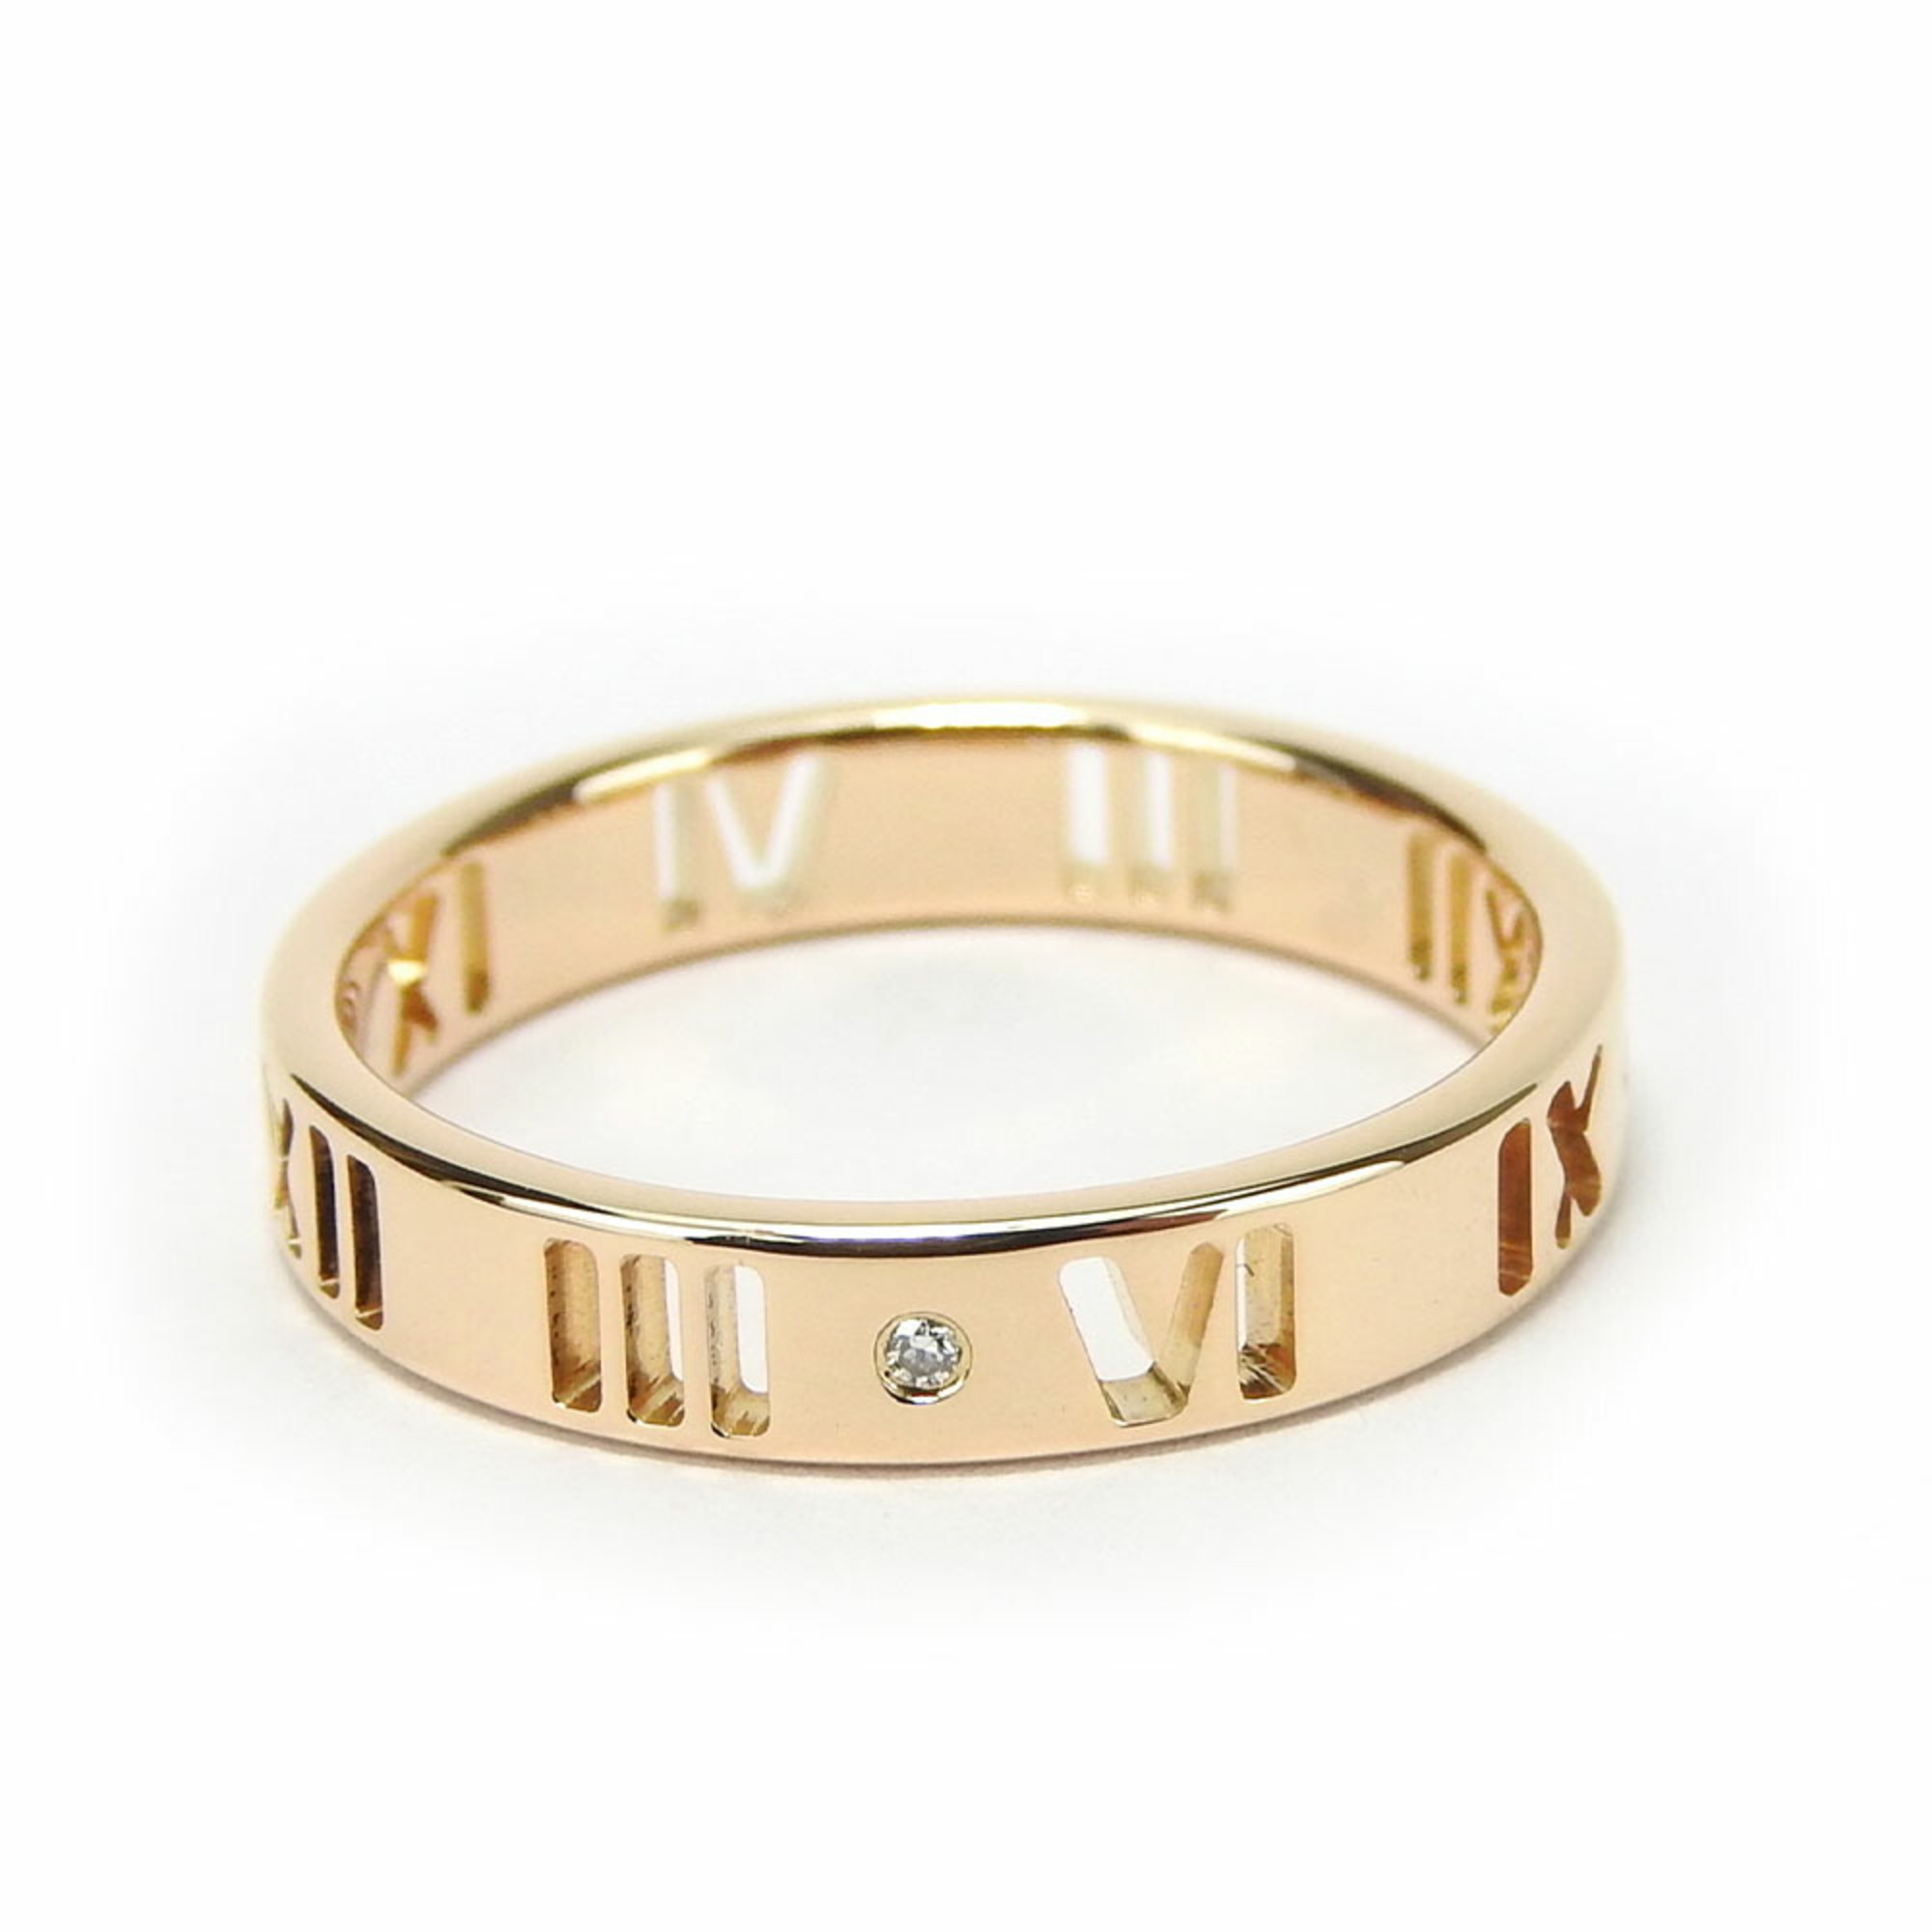 Tiffany & Co. Atlas Diamond Ring, K18PG, Pink Gold, Approx. 4P Diamond, Women's, TIFFANY